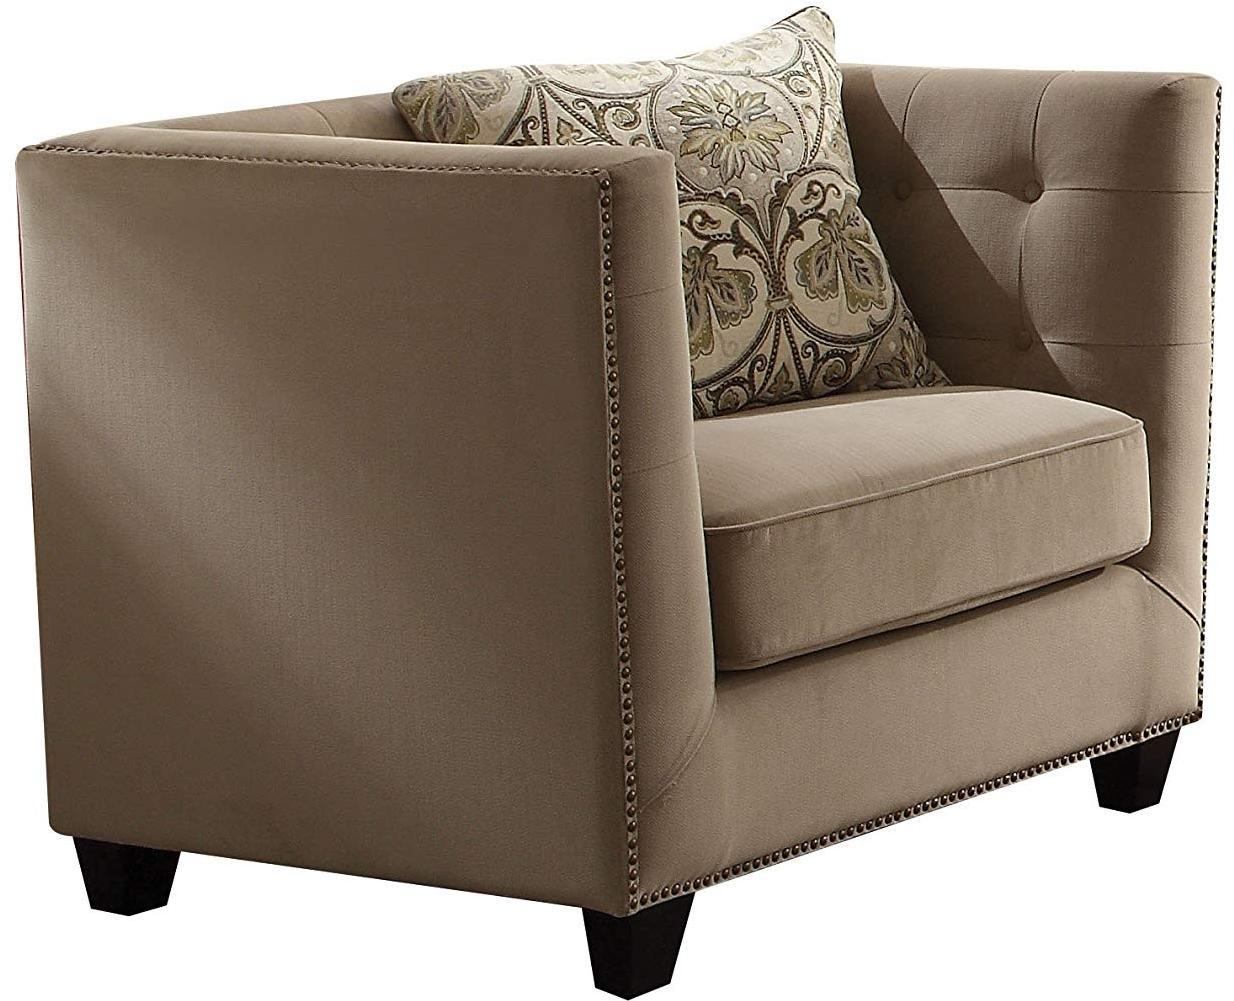 

    
Juliana-Damien-53585-Set-4 Acme Furniture Sofa Loveseat Chair and Ottoman Set
